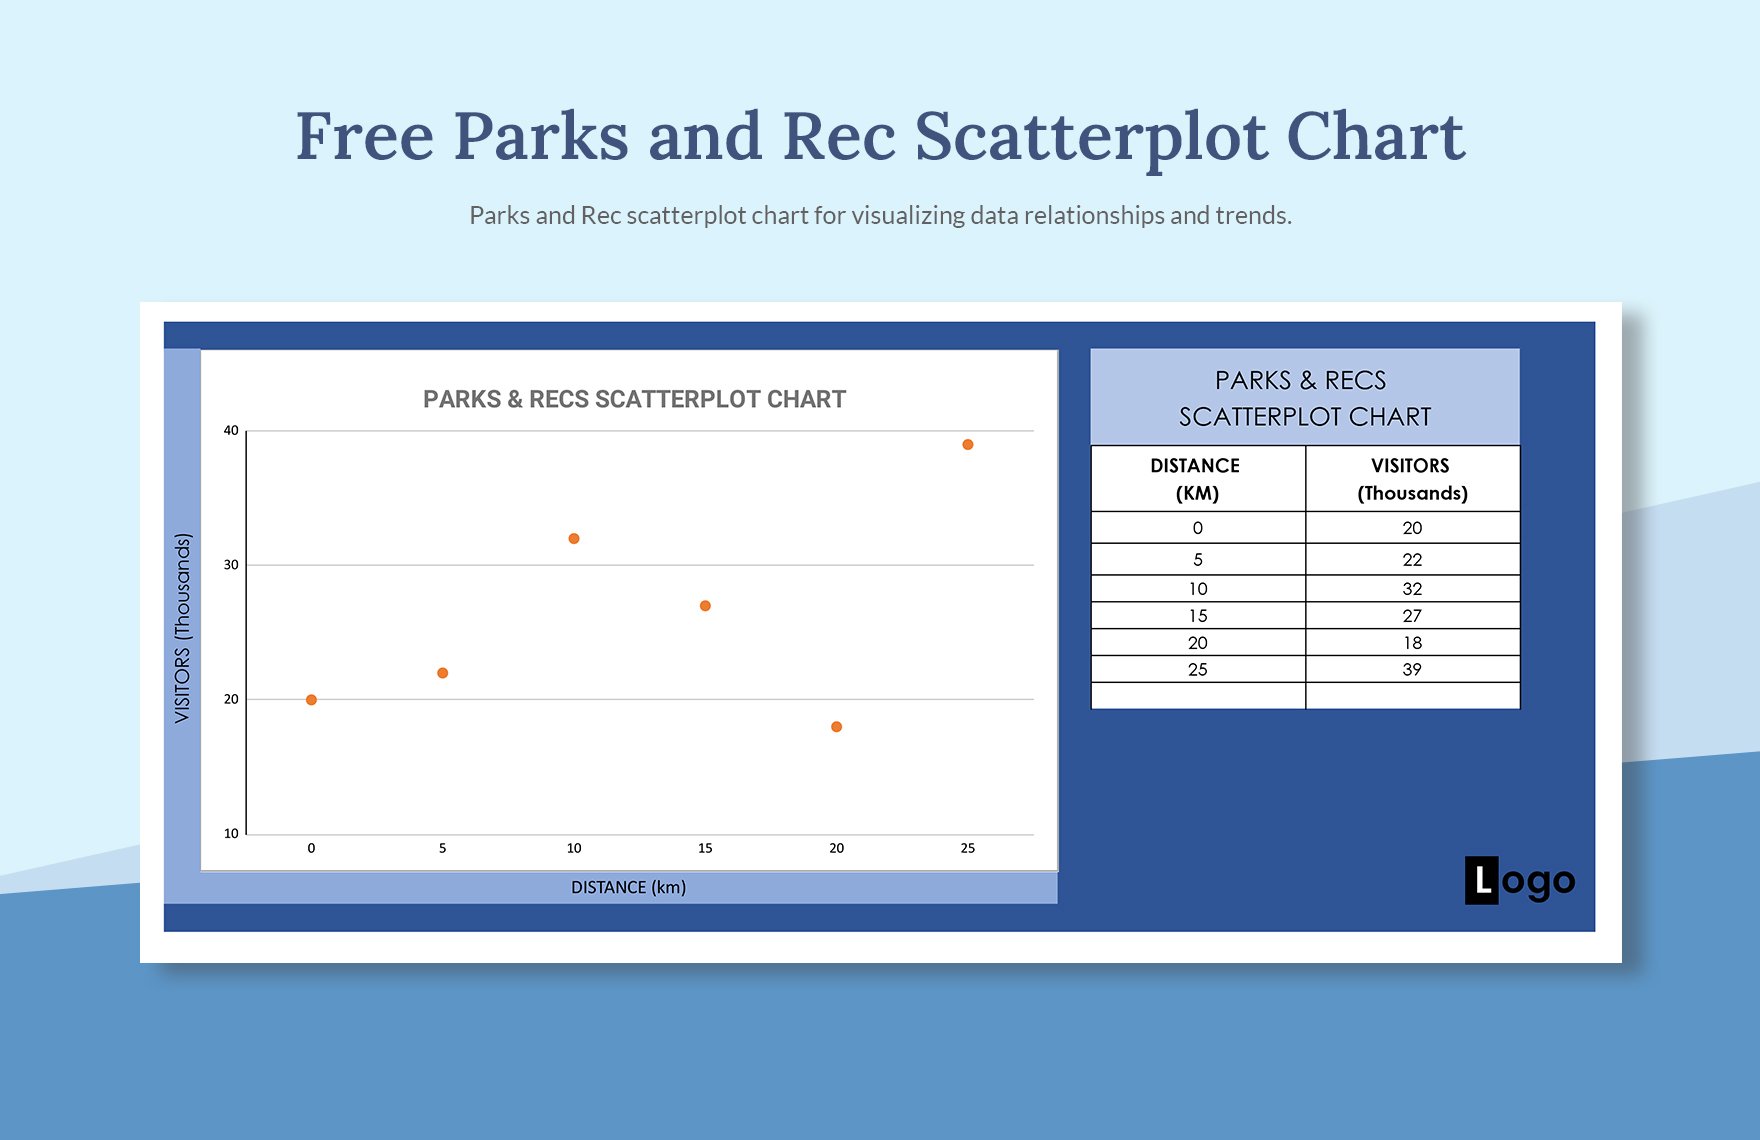 Parks & Rec Scatterplot Chart